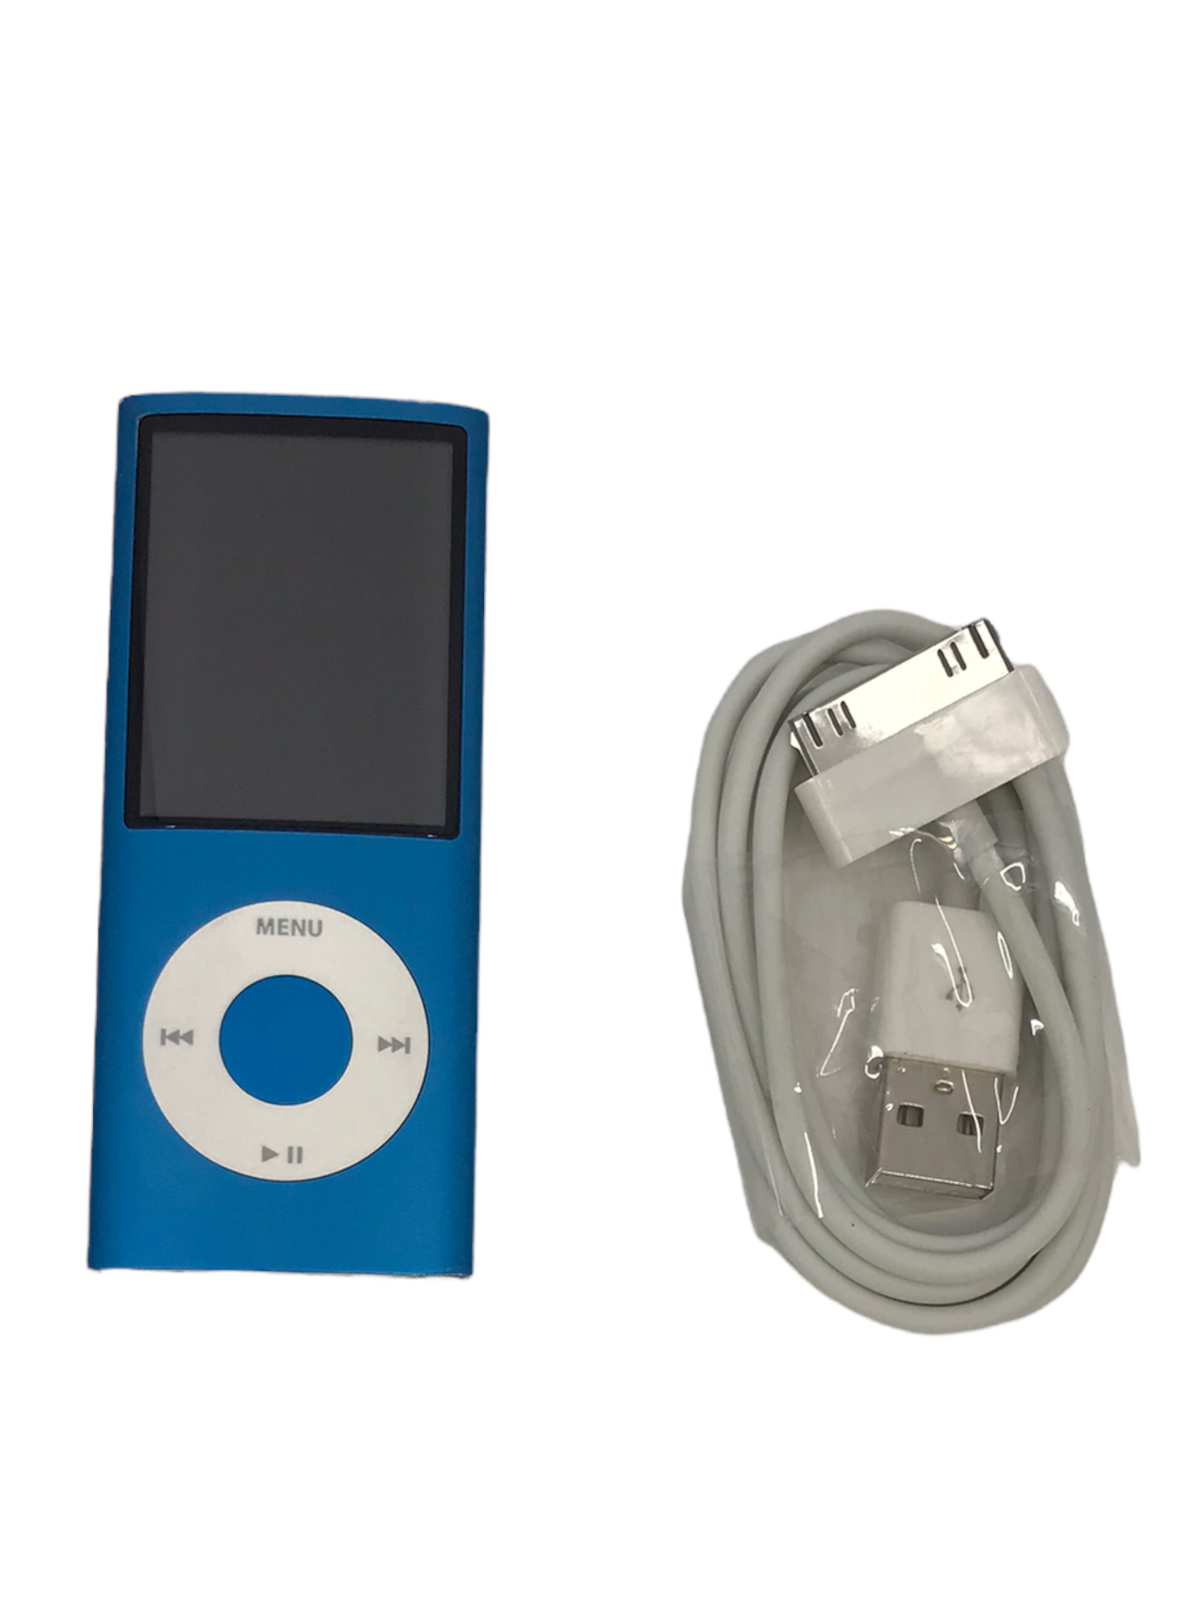 Apple iPod Nano Model A1320 8GB 5th Generation MP3 Player Light Blue #8461  Used